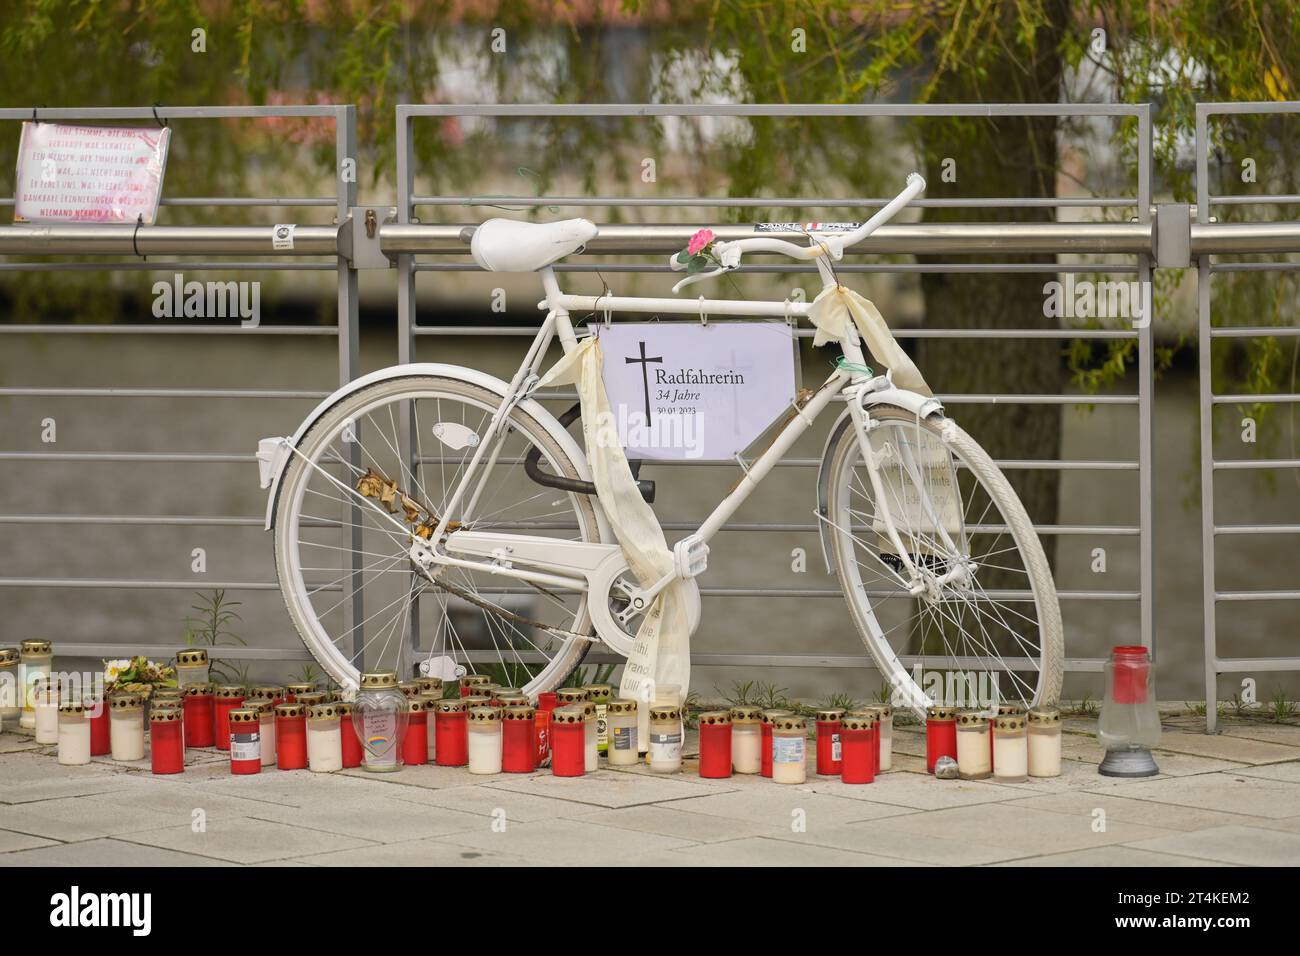 Geisterrad erinert an Fahrradunfall mit Todesfolge, Hafencity, Hamburg, Deutschland *** Ghost bike commémore un accident de vélo ayant entraîné la mort, Hafencity, Hambourg, Allemagne Credit : Imago/Alamy Live News Banque D'Images